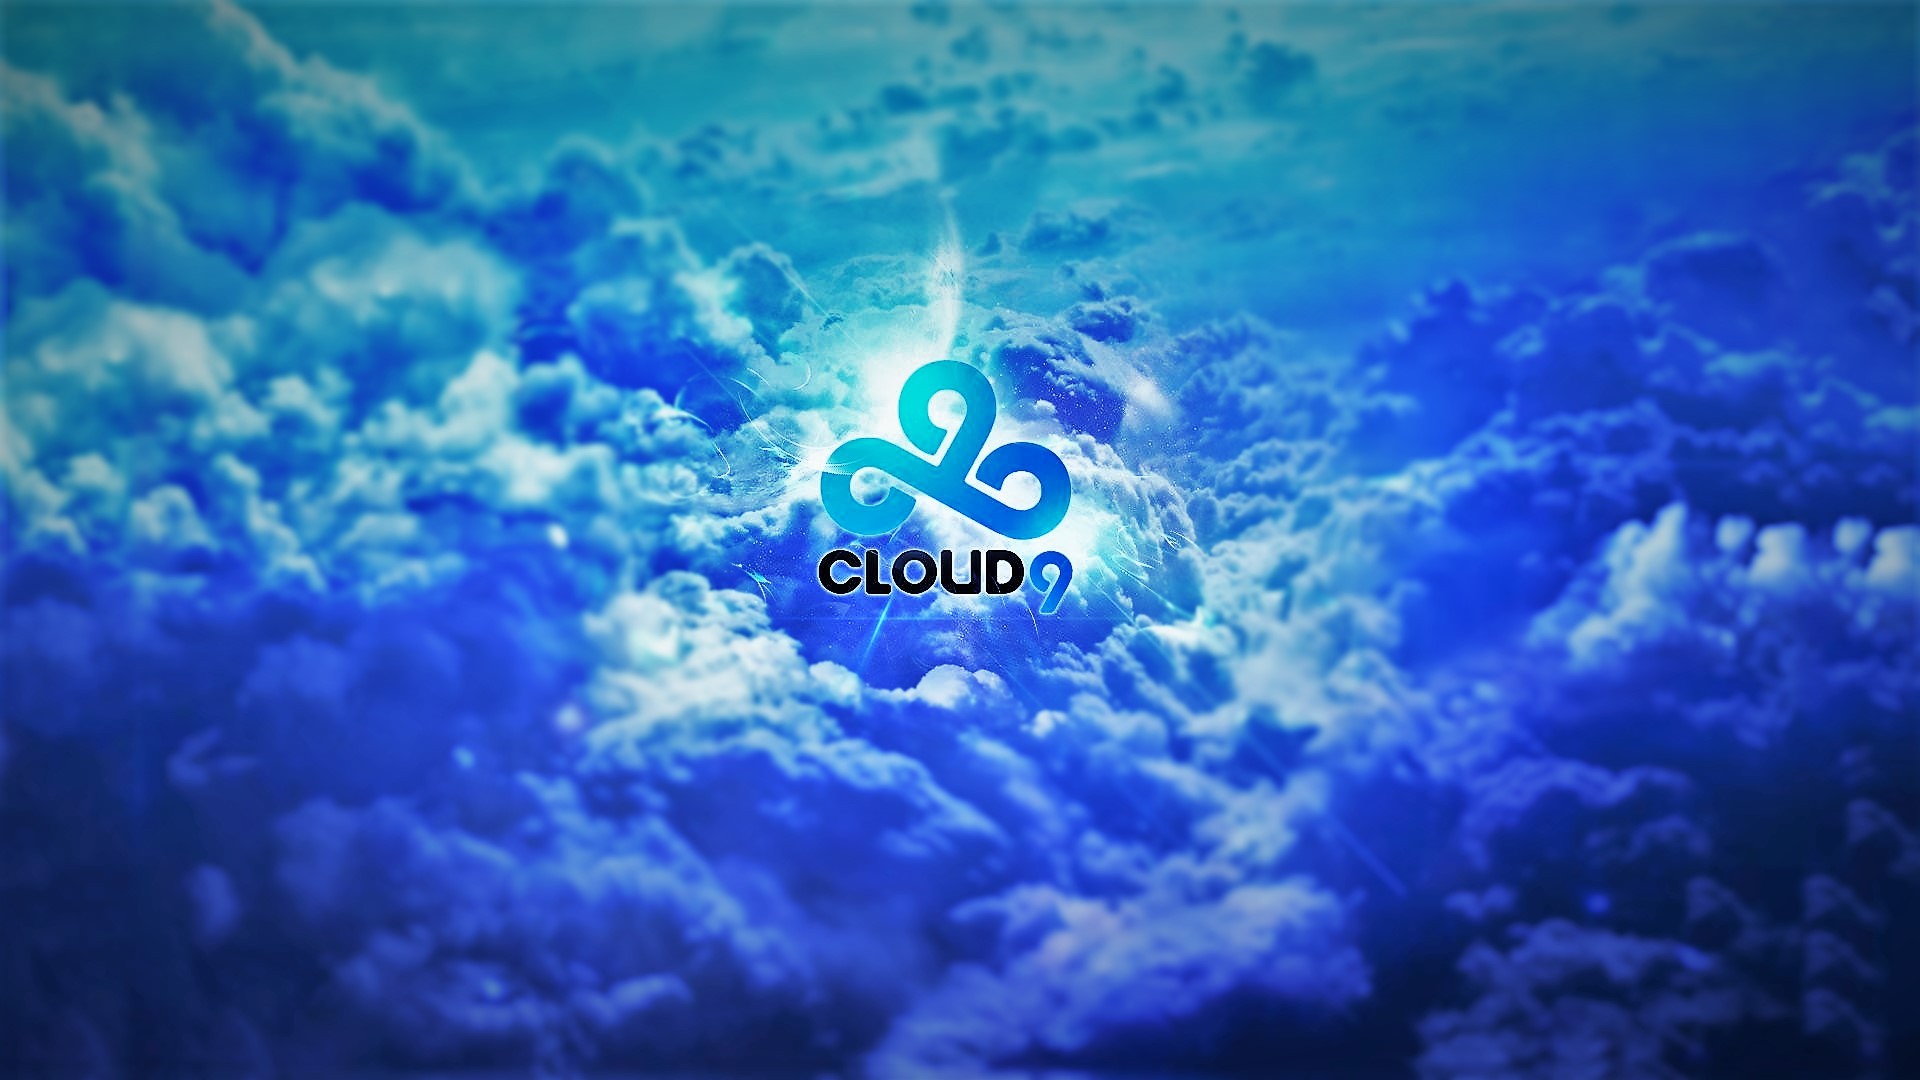 Cloud9 Cloud9 Blue Sky Clouds 9 1920x1080